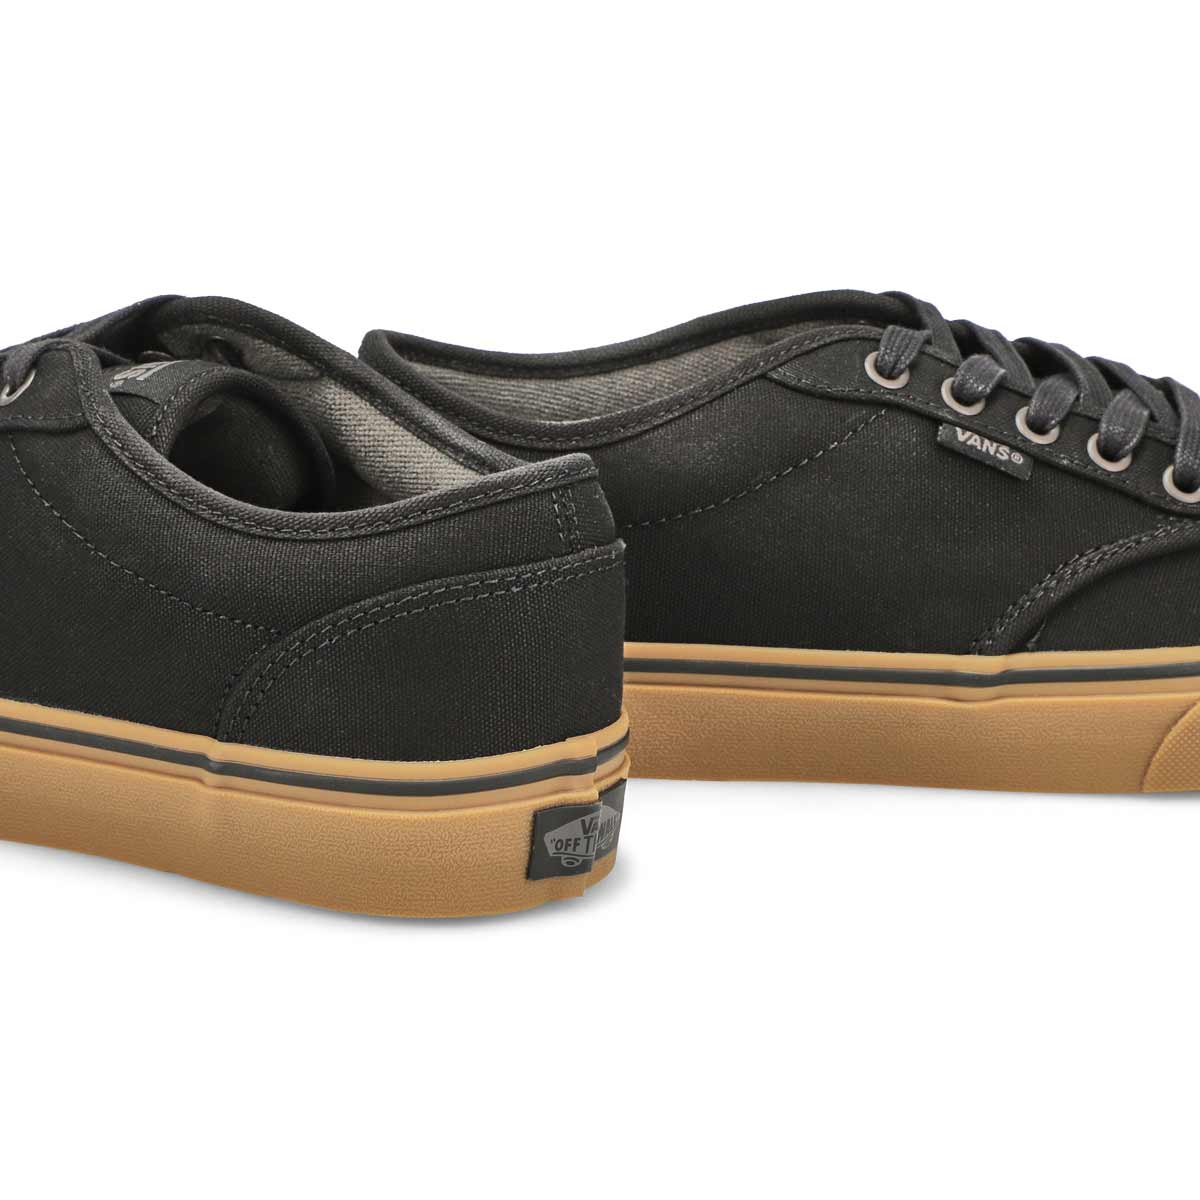 Vans Men's Atwood Sneaker - Black/Gum 